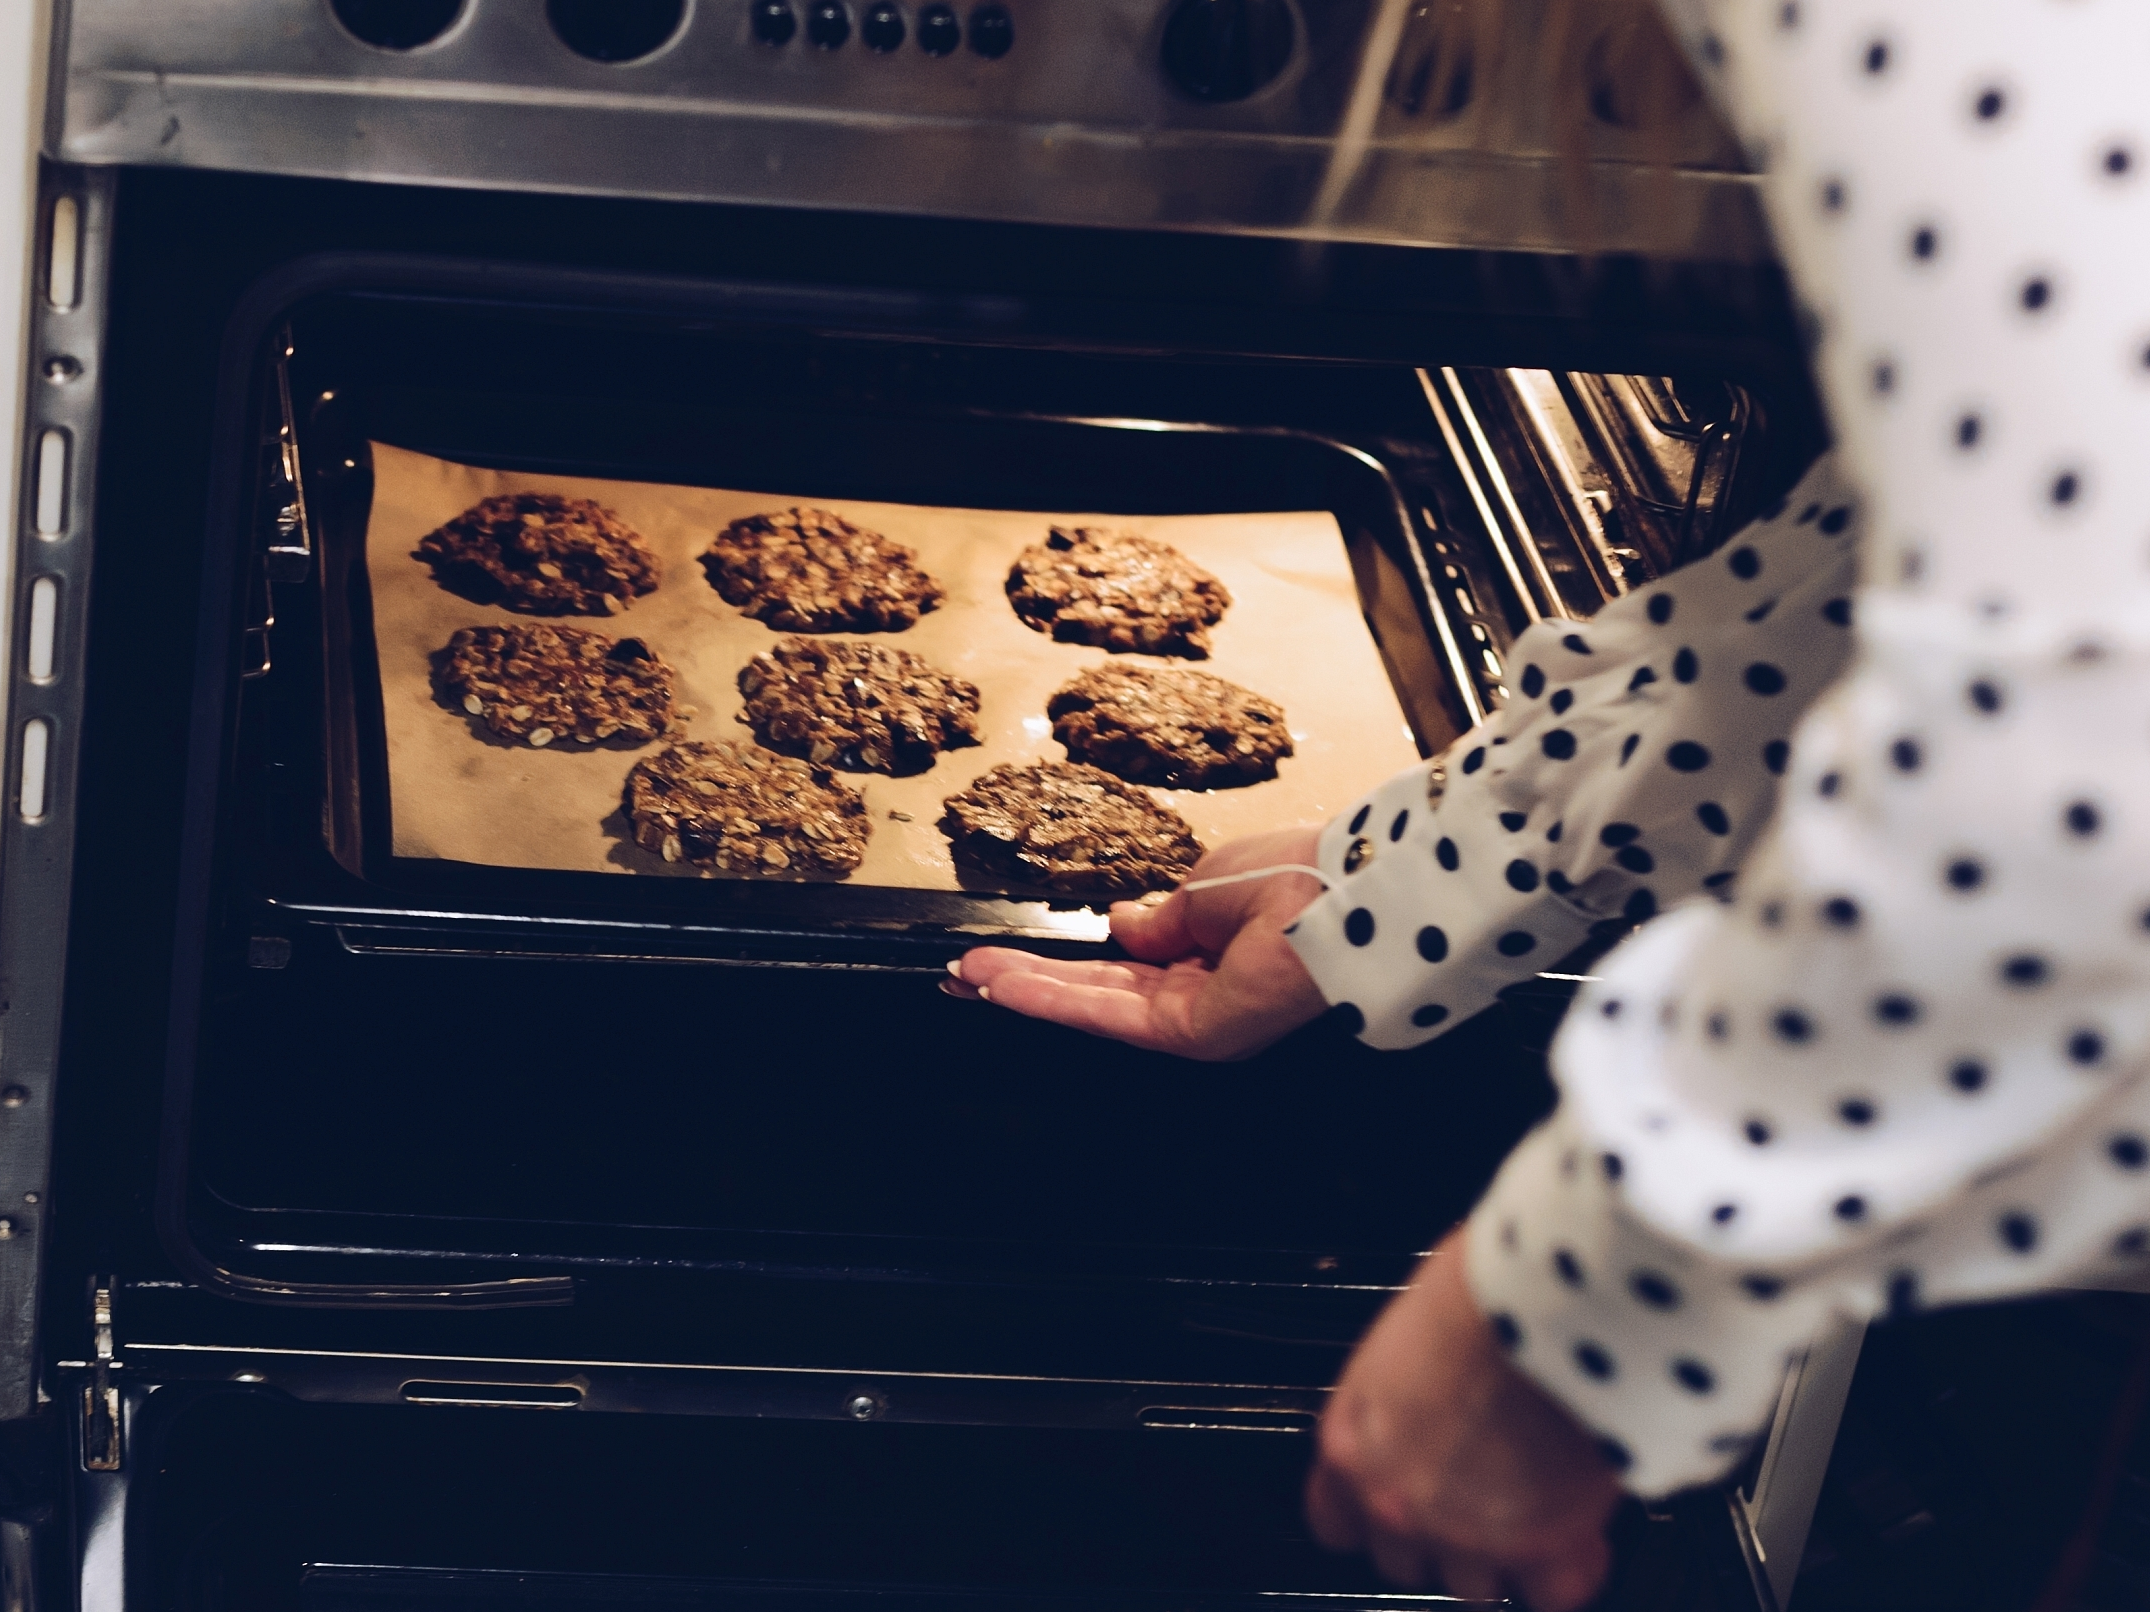 Температура духовки печенье. Печь печенье. Печенье из духовки. Печет печенье в духовке. Духовка с печеньем внутри.